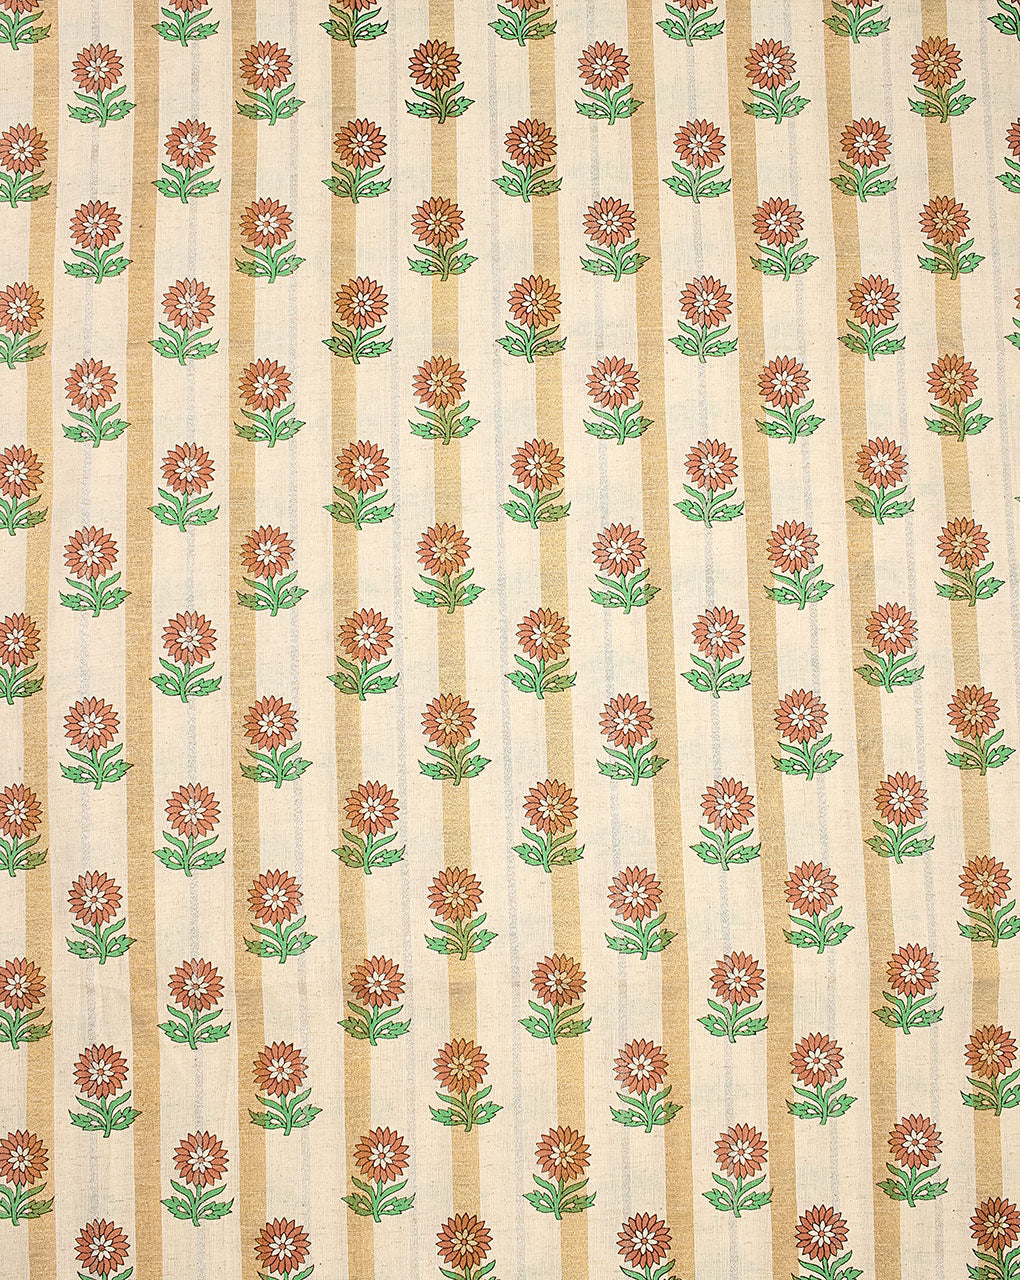 Screen Print Zari Flex Cotton Fabric - Fabriclore.com